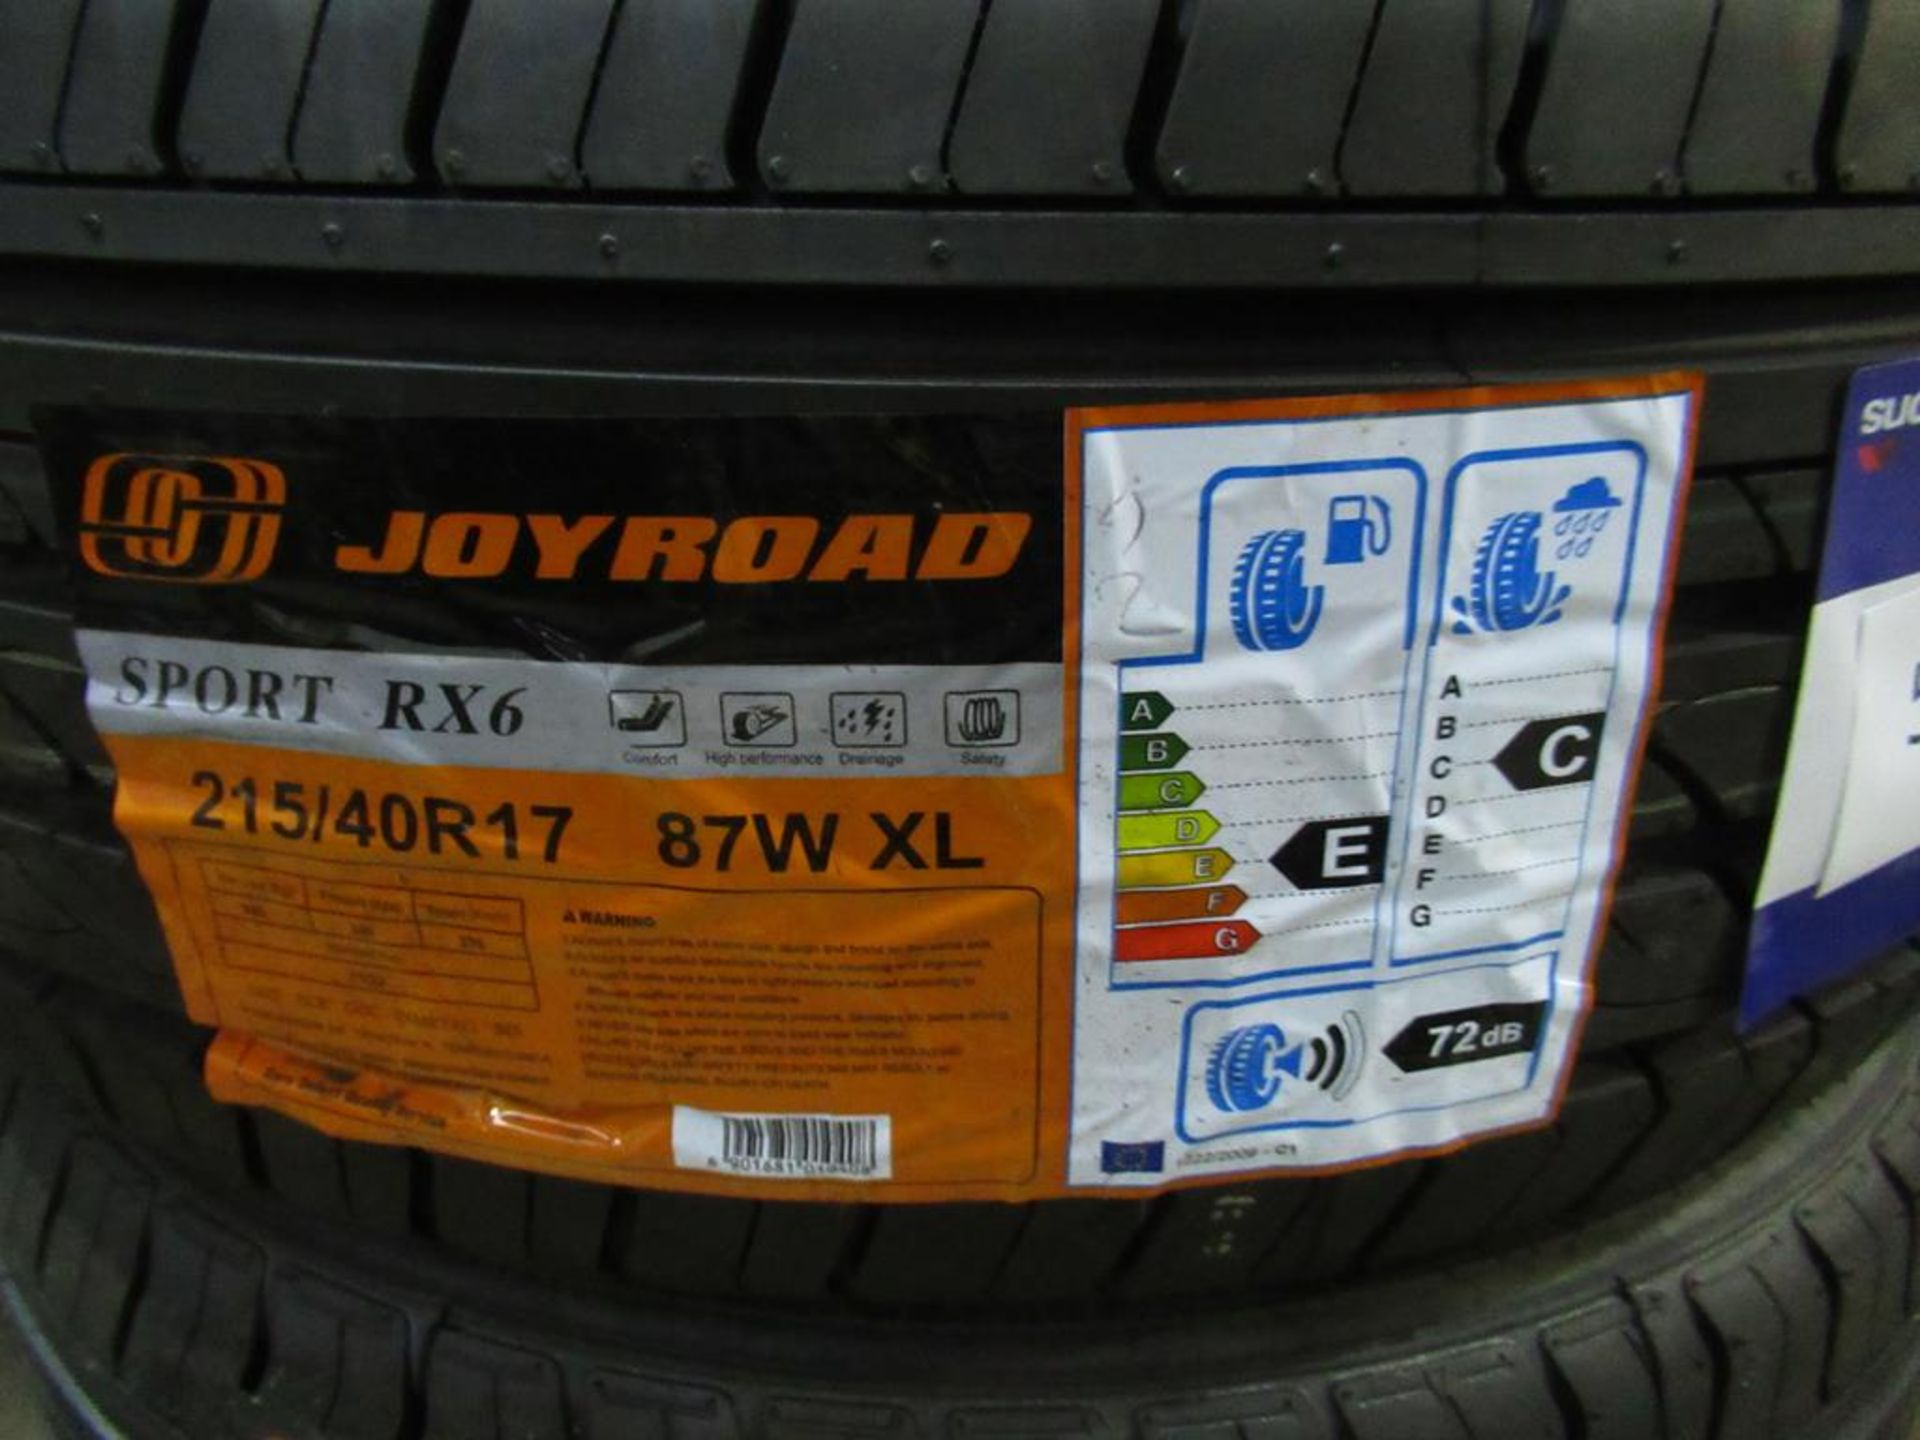 2 unused JoyRoad Sport RX6 215/40R17 87W XL tyres - Image 3 of 3